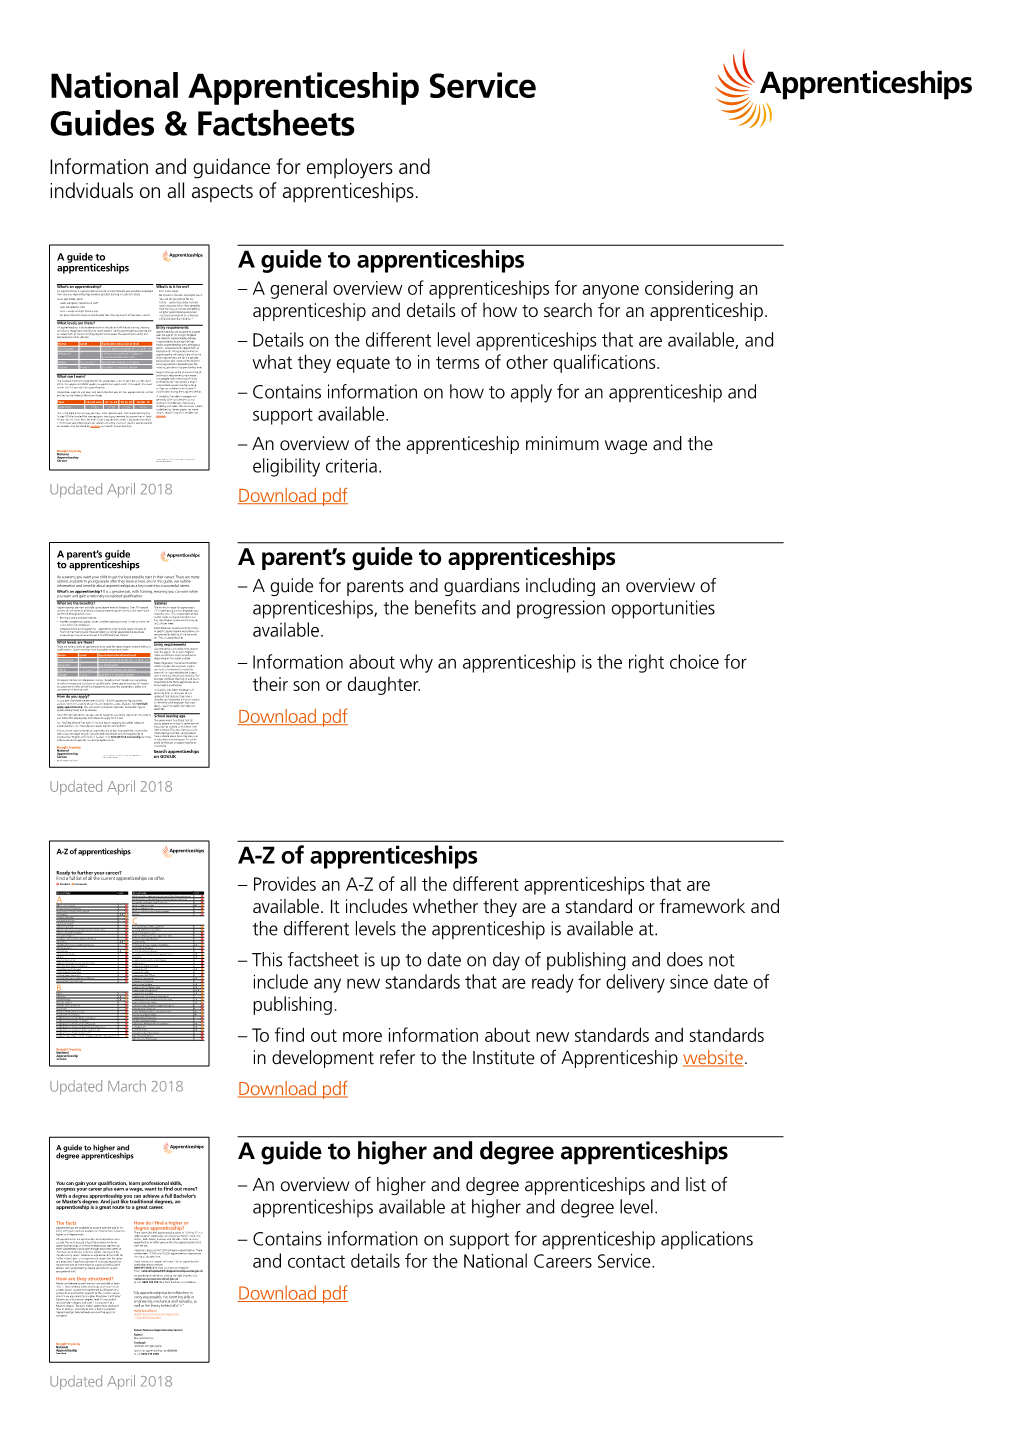 National Apprenticeship Service Guides & Factsheets Download